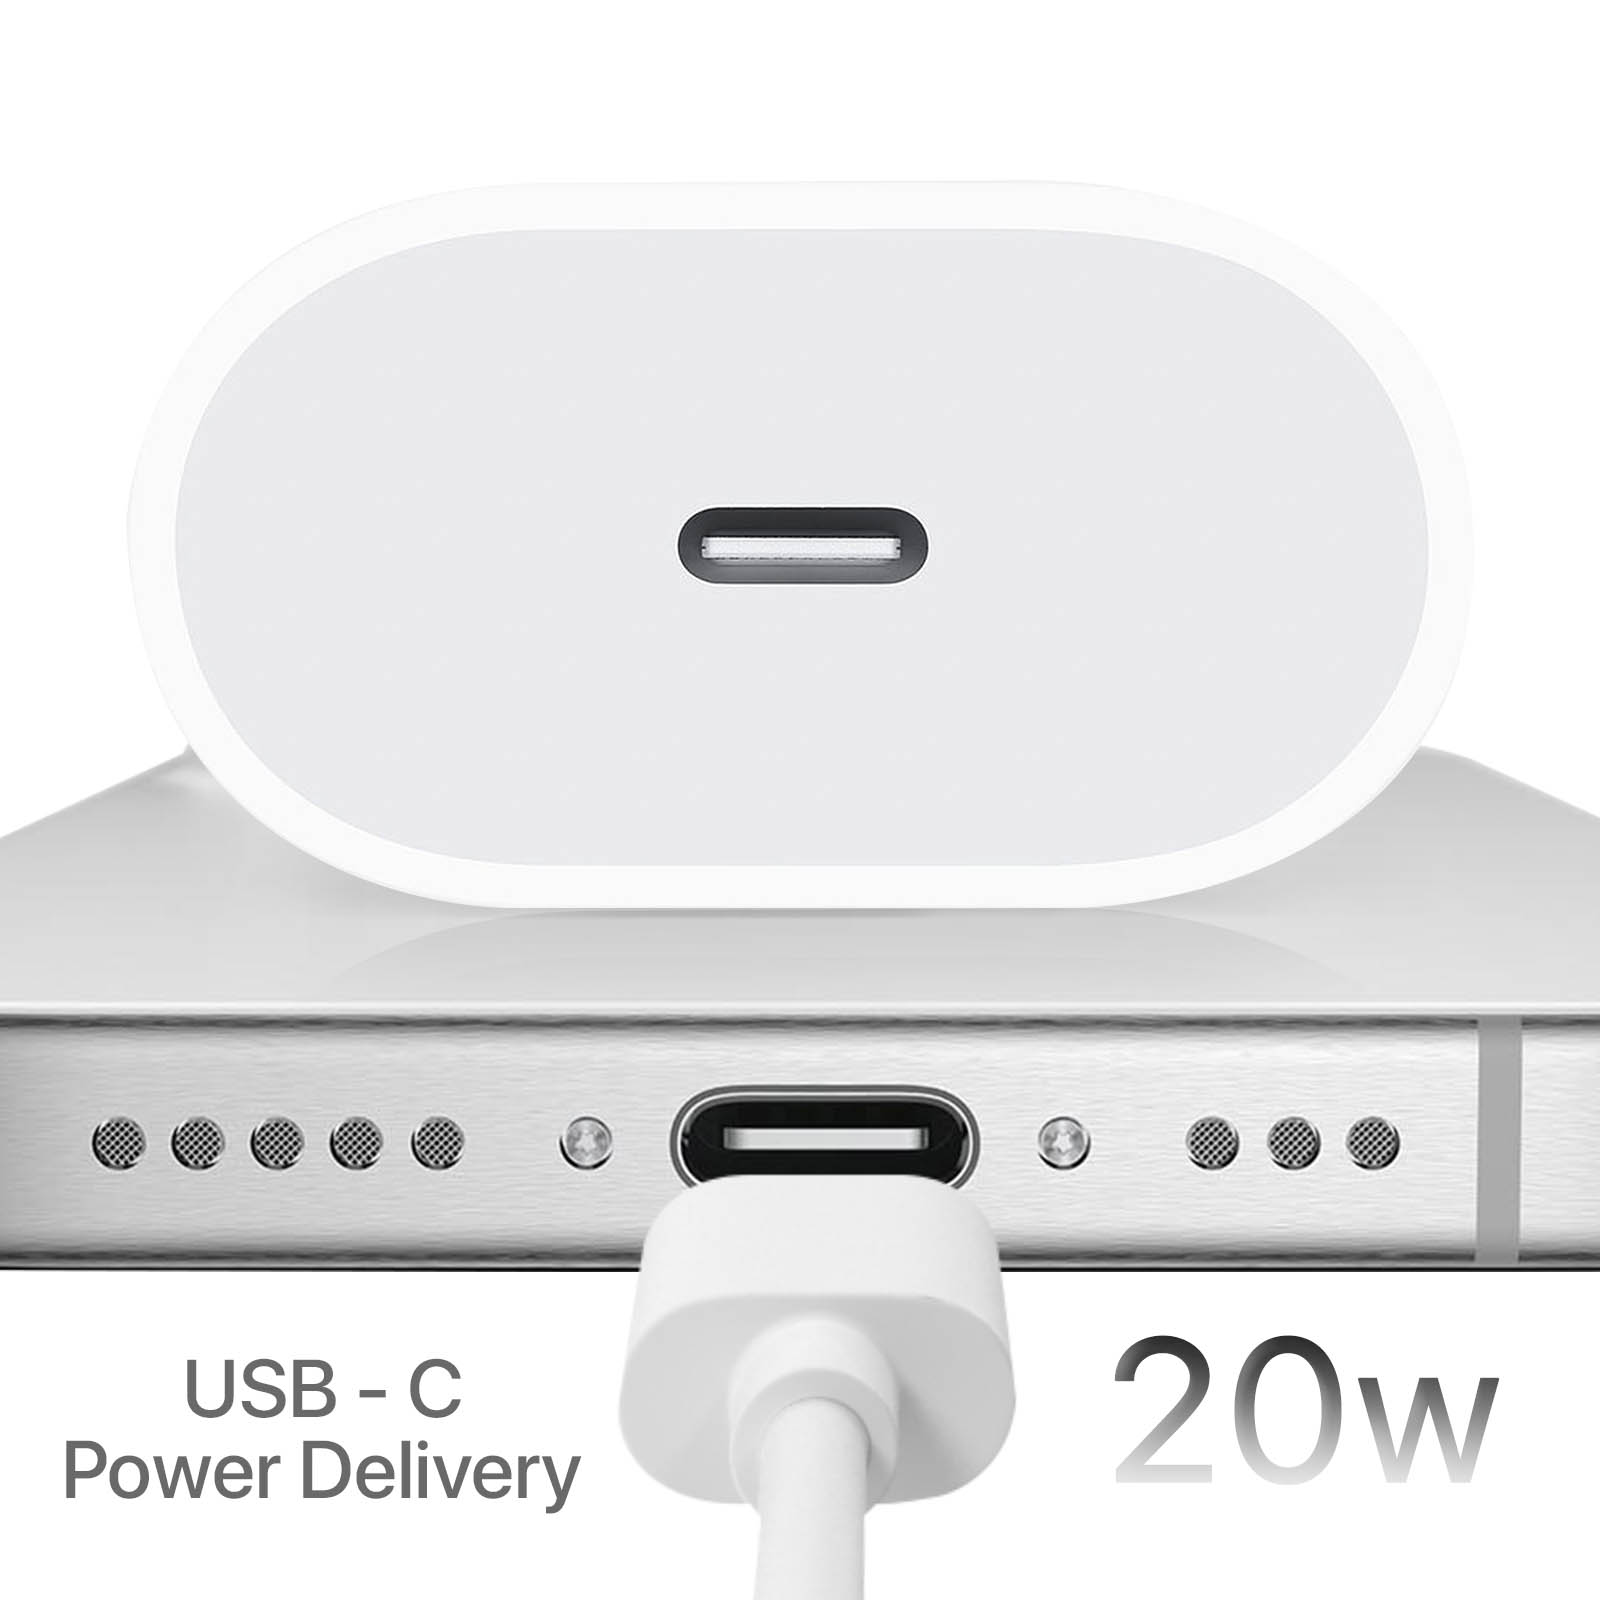 Lot chargeur + câble usb-c 20w Apple Destockage Grossiste